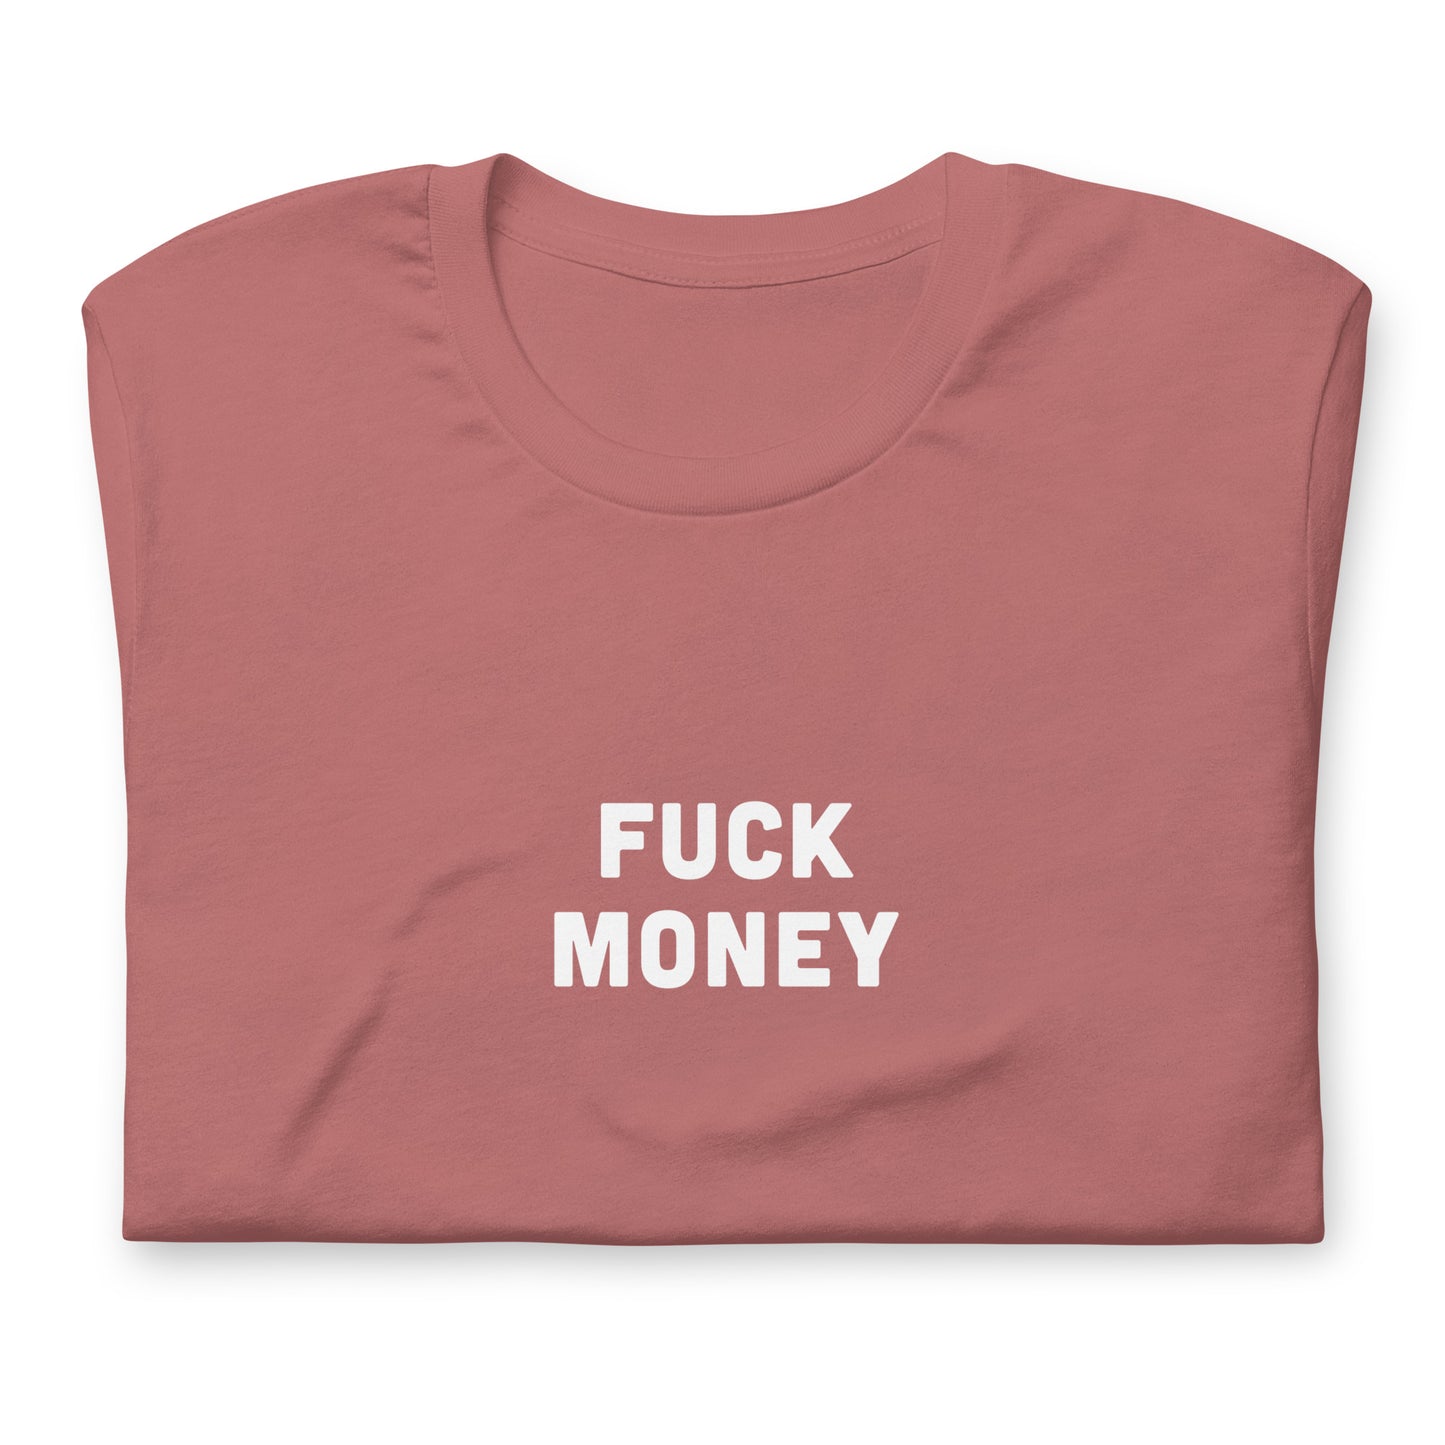 Fuck Money T-Shirt Size XL Color Navy